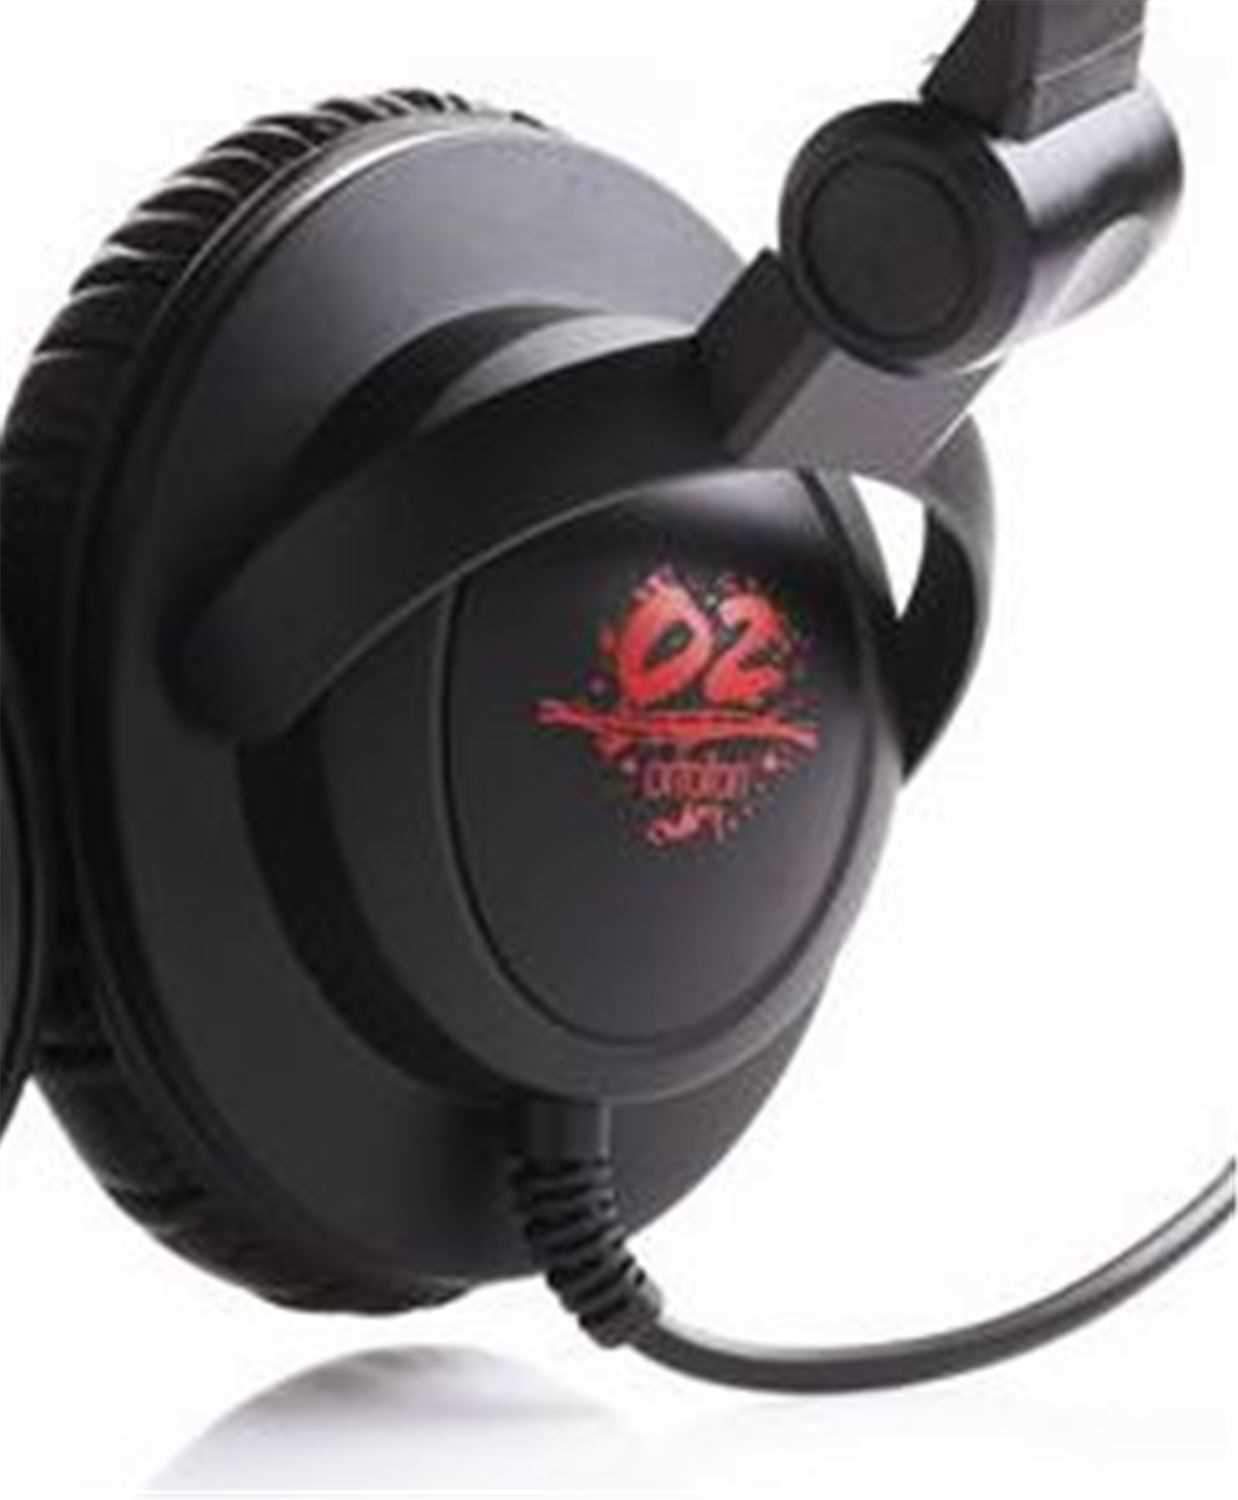 Ortofon O-2 Closed Back Professional DJ Headphones - PSSL ProSound and Stage Lighting